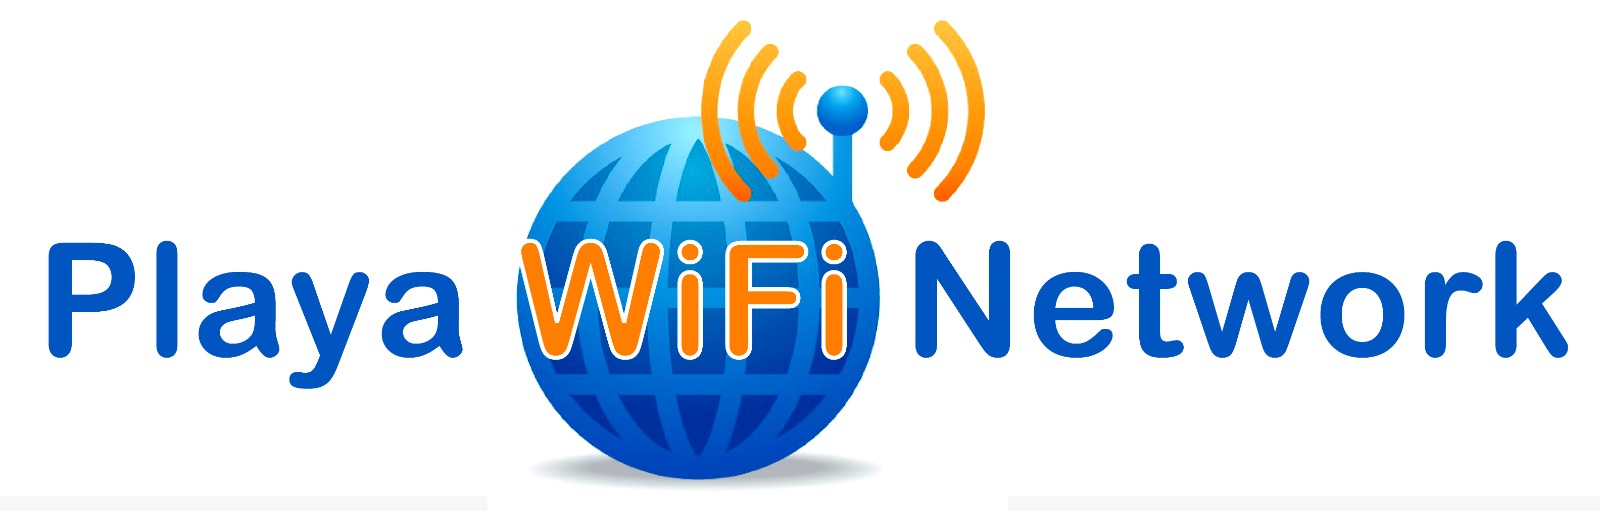 Playa WiFi Network